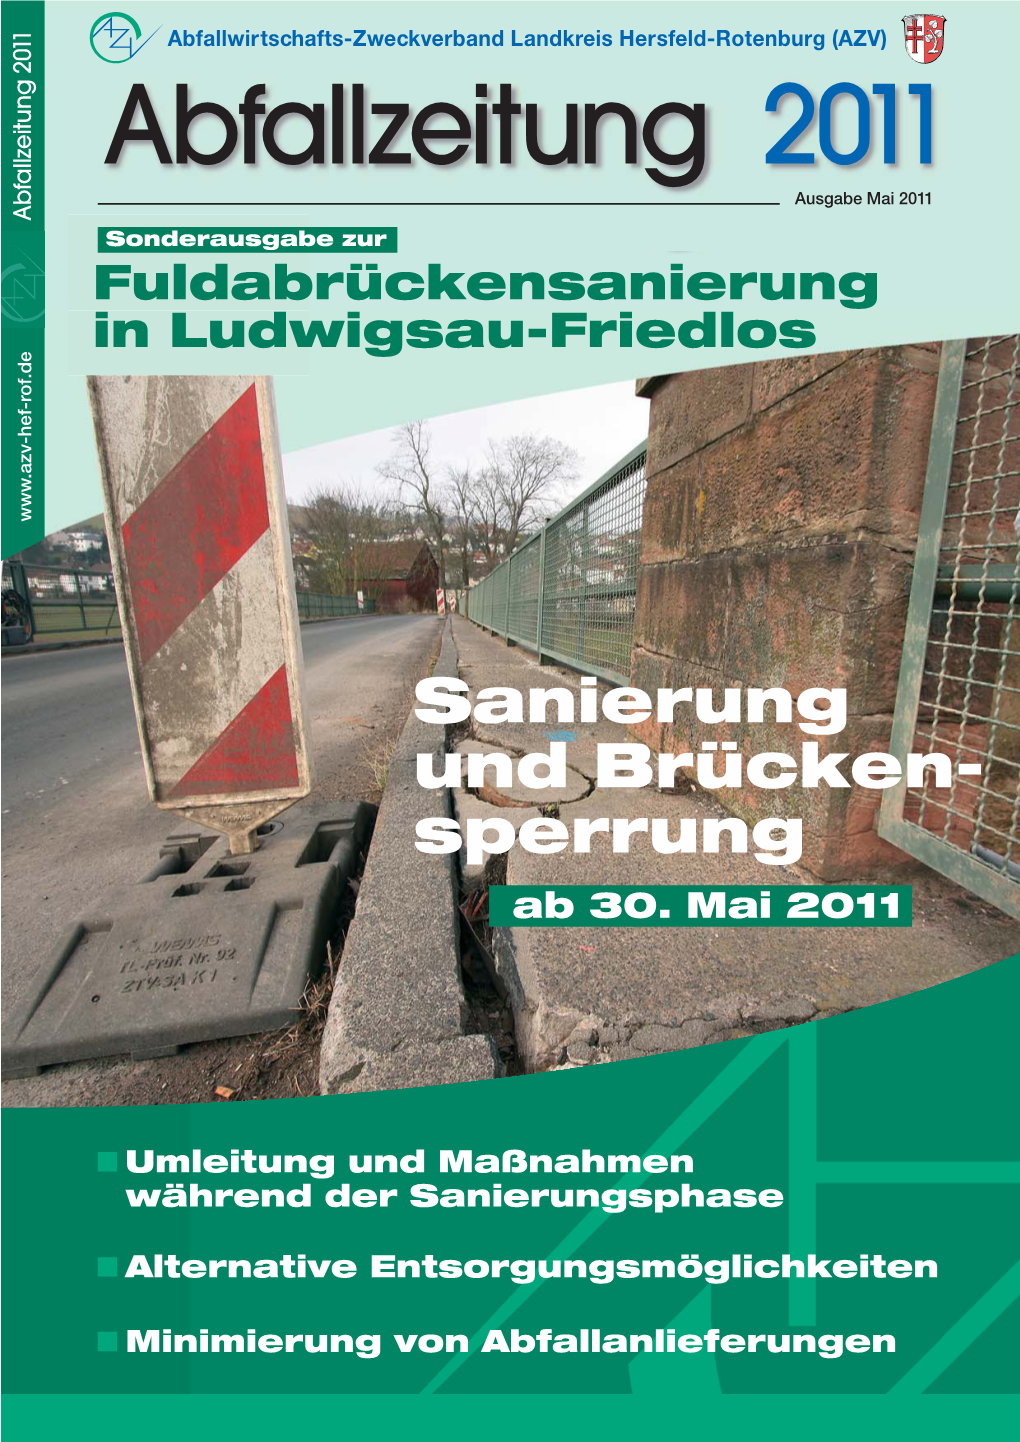 Abfallzeitung 2011 Ausgabe Mai 2011 Abfallzeitung 2011 Abfallzeitung Sonderausgabe Zur Fuldabrückensanierung in Ludwigsau-Friedlos